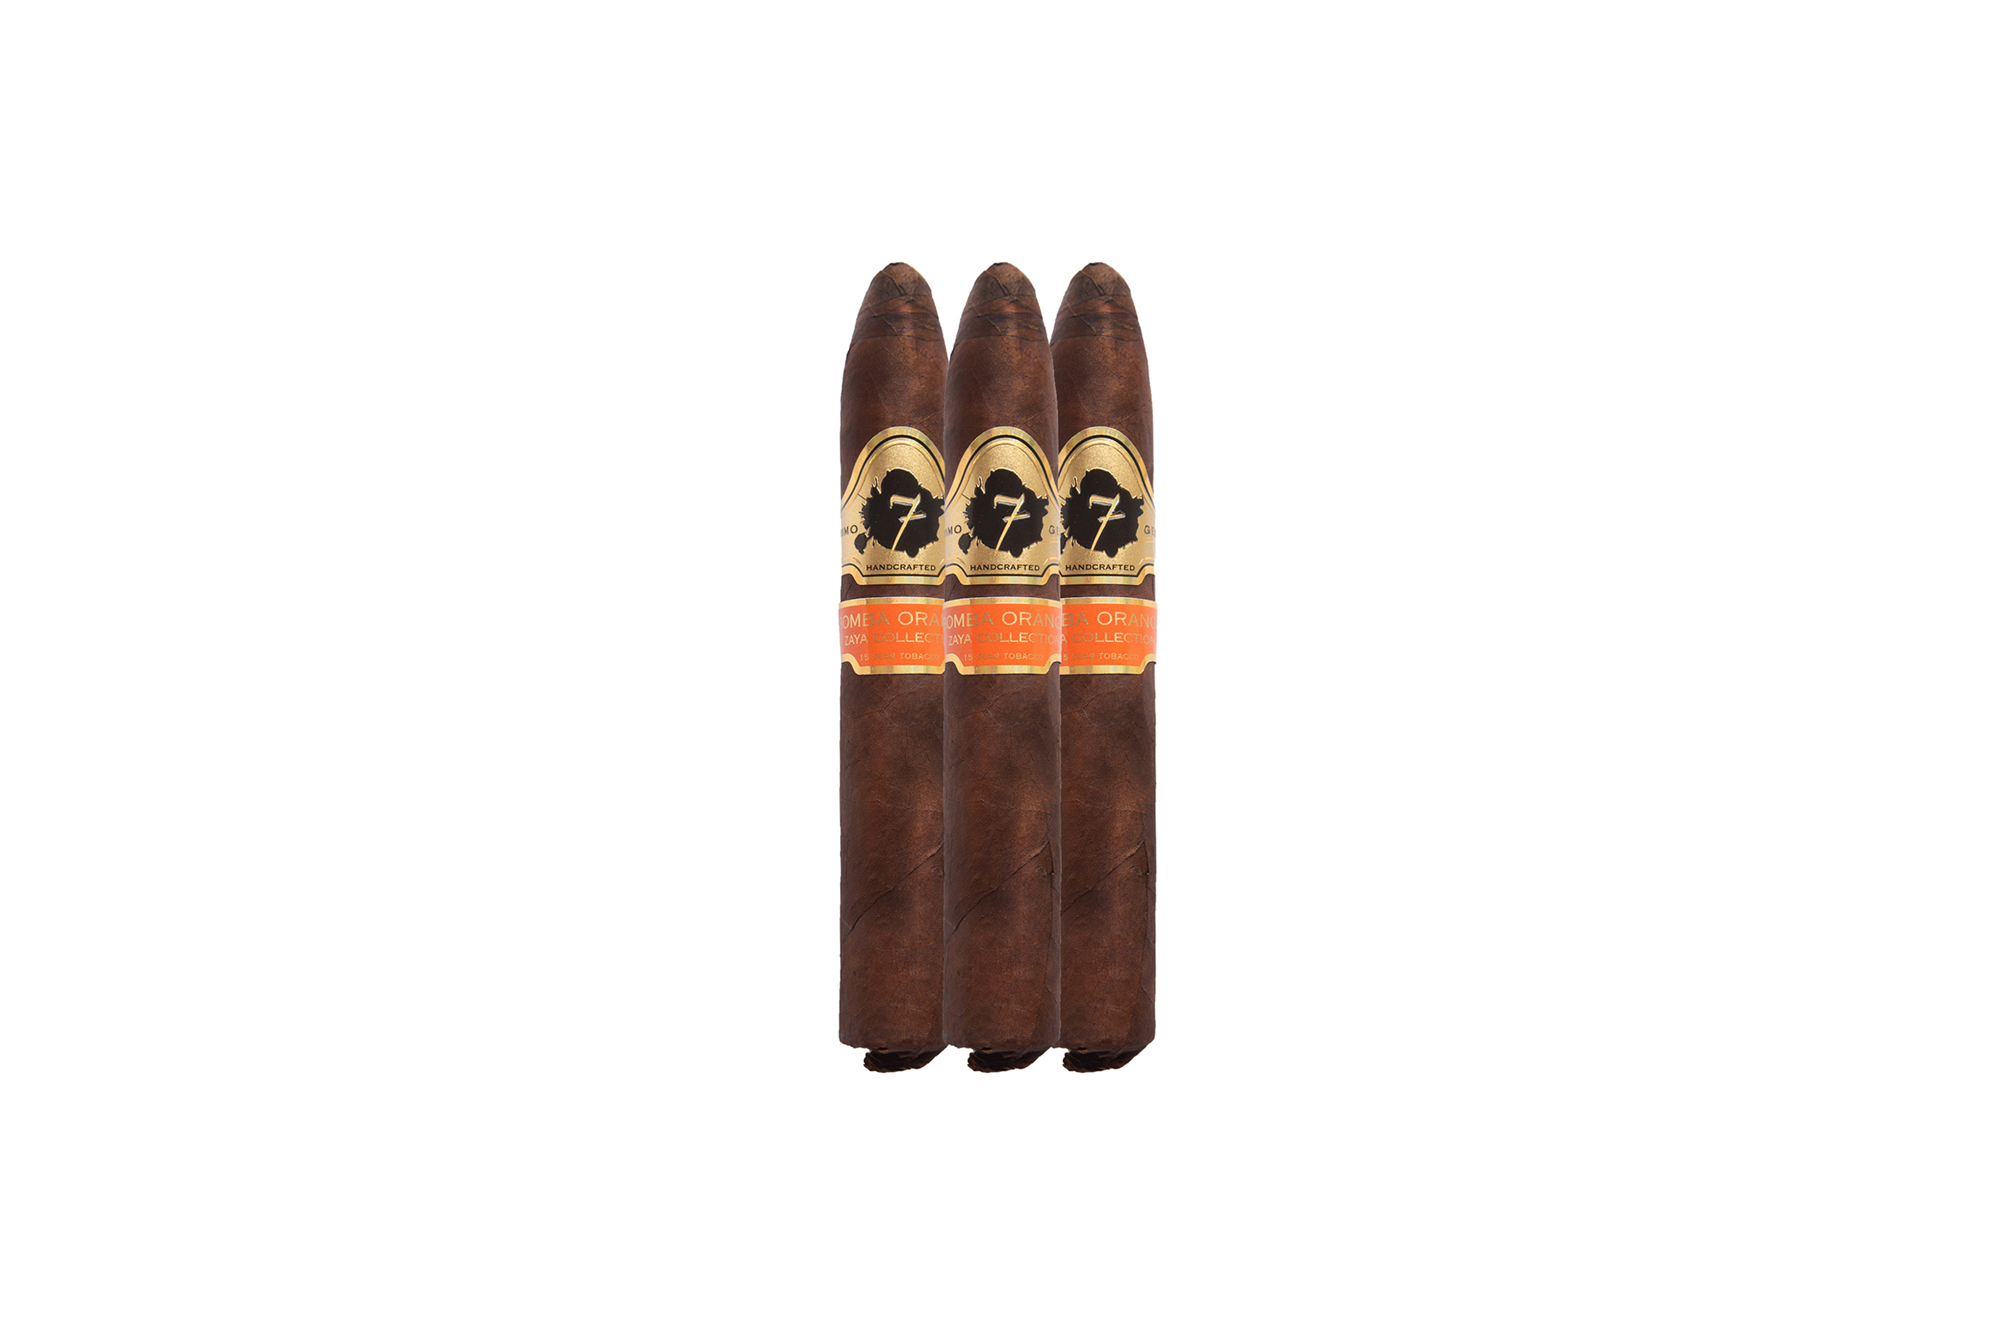 Bomba Orange Cigars For Sale